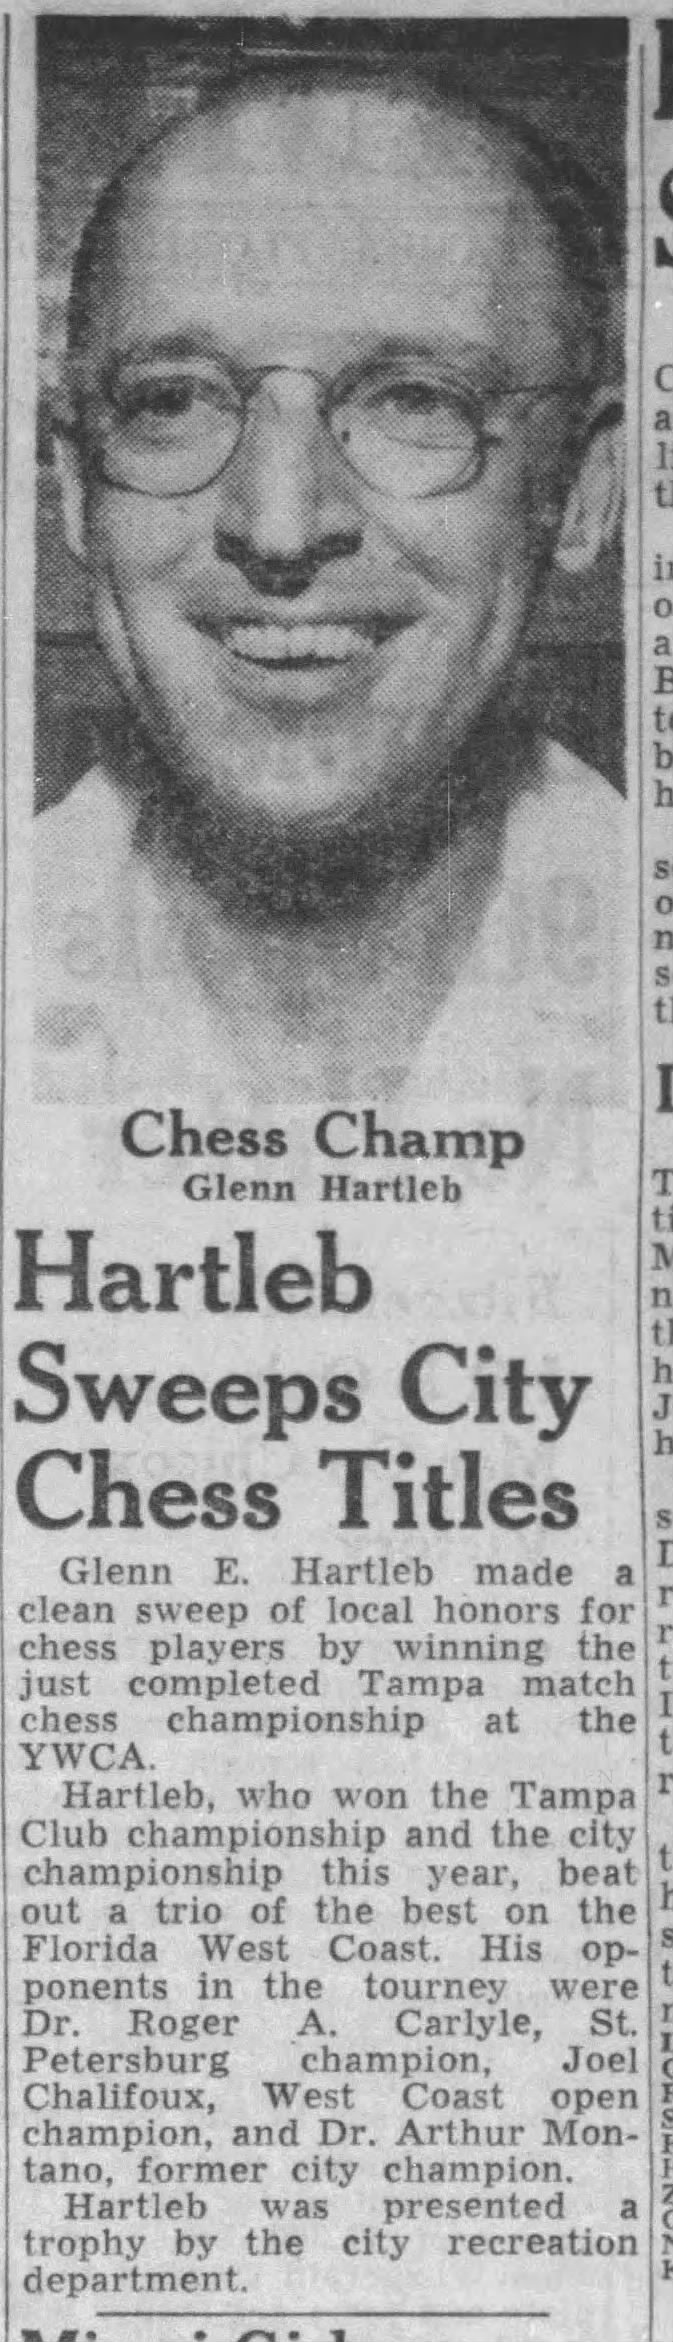 Hartleb Sweeps City Chess Titles